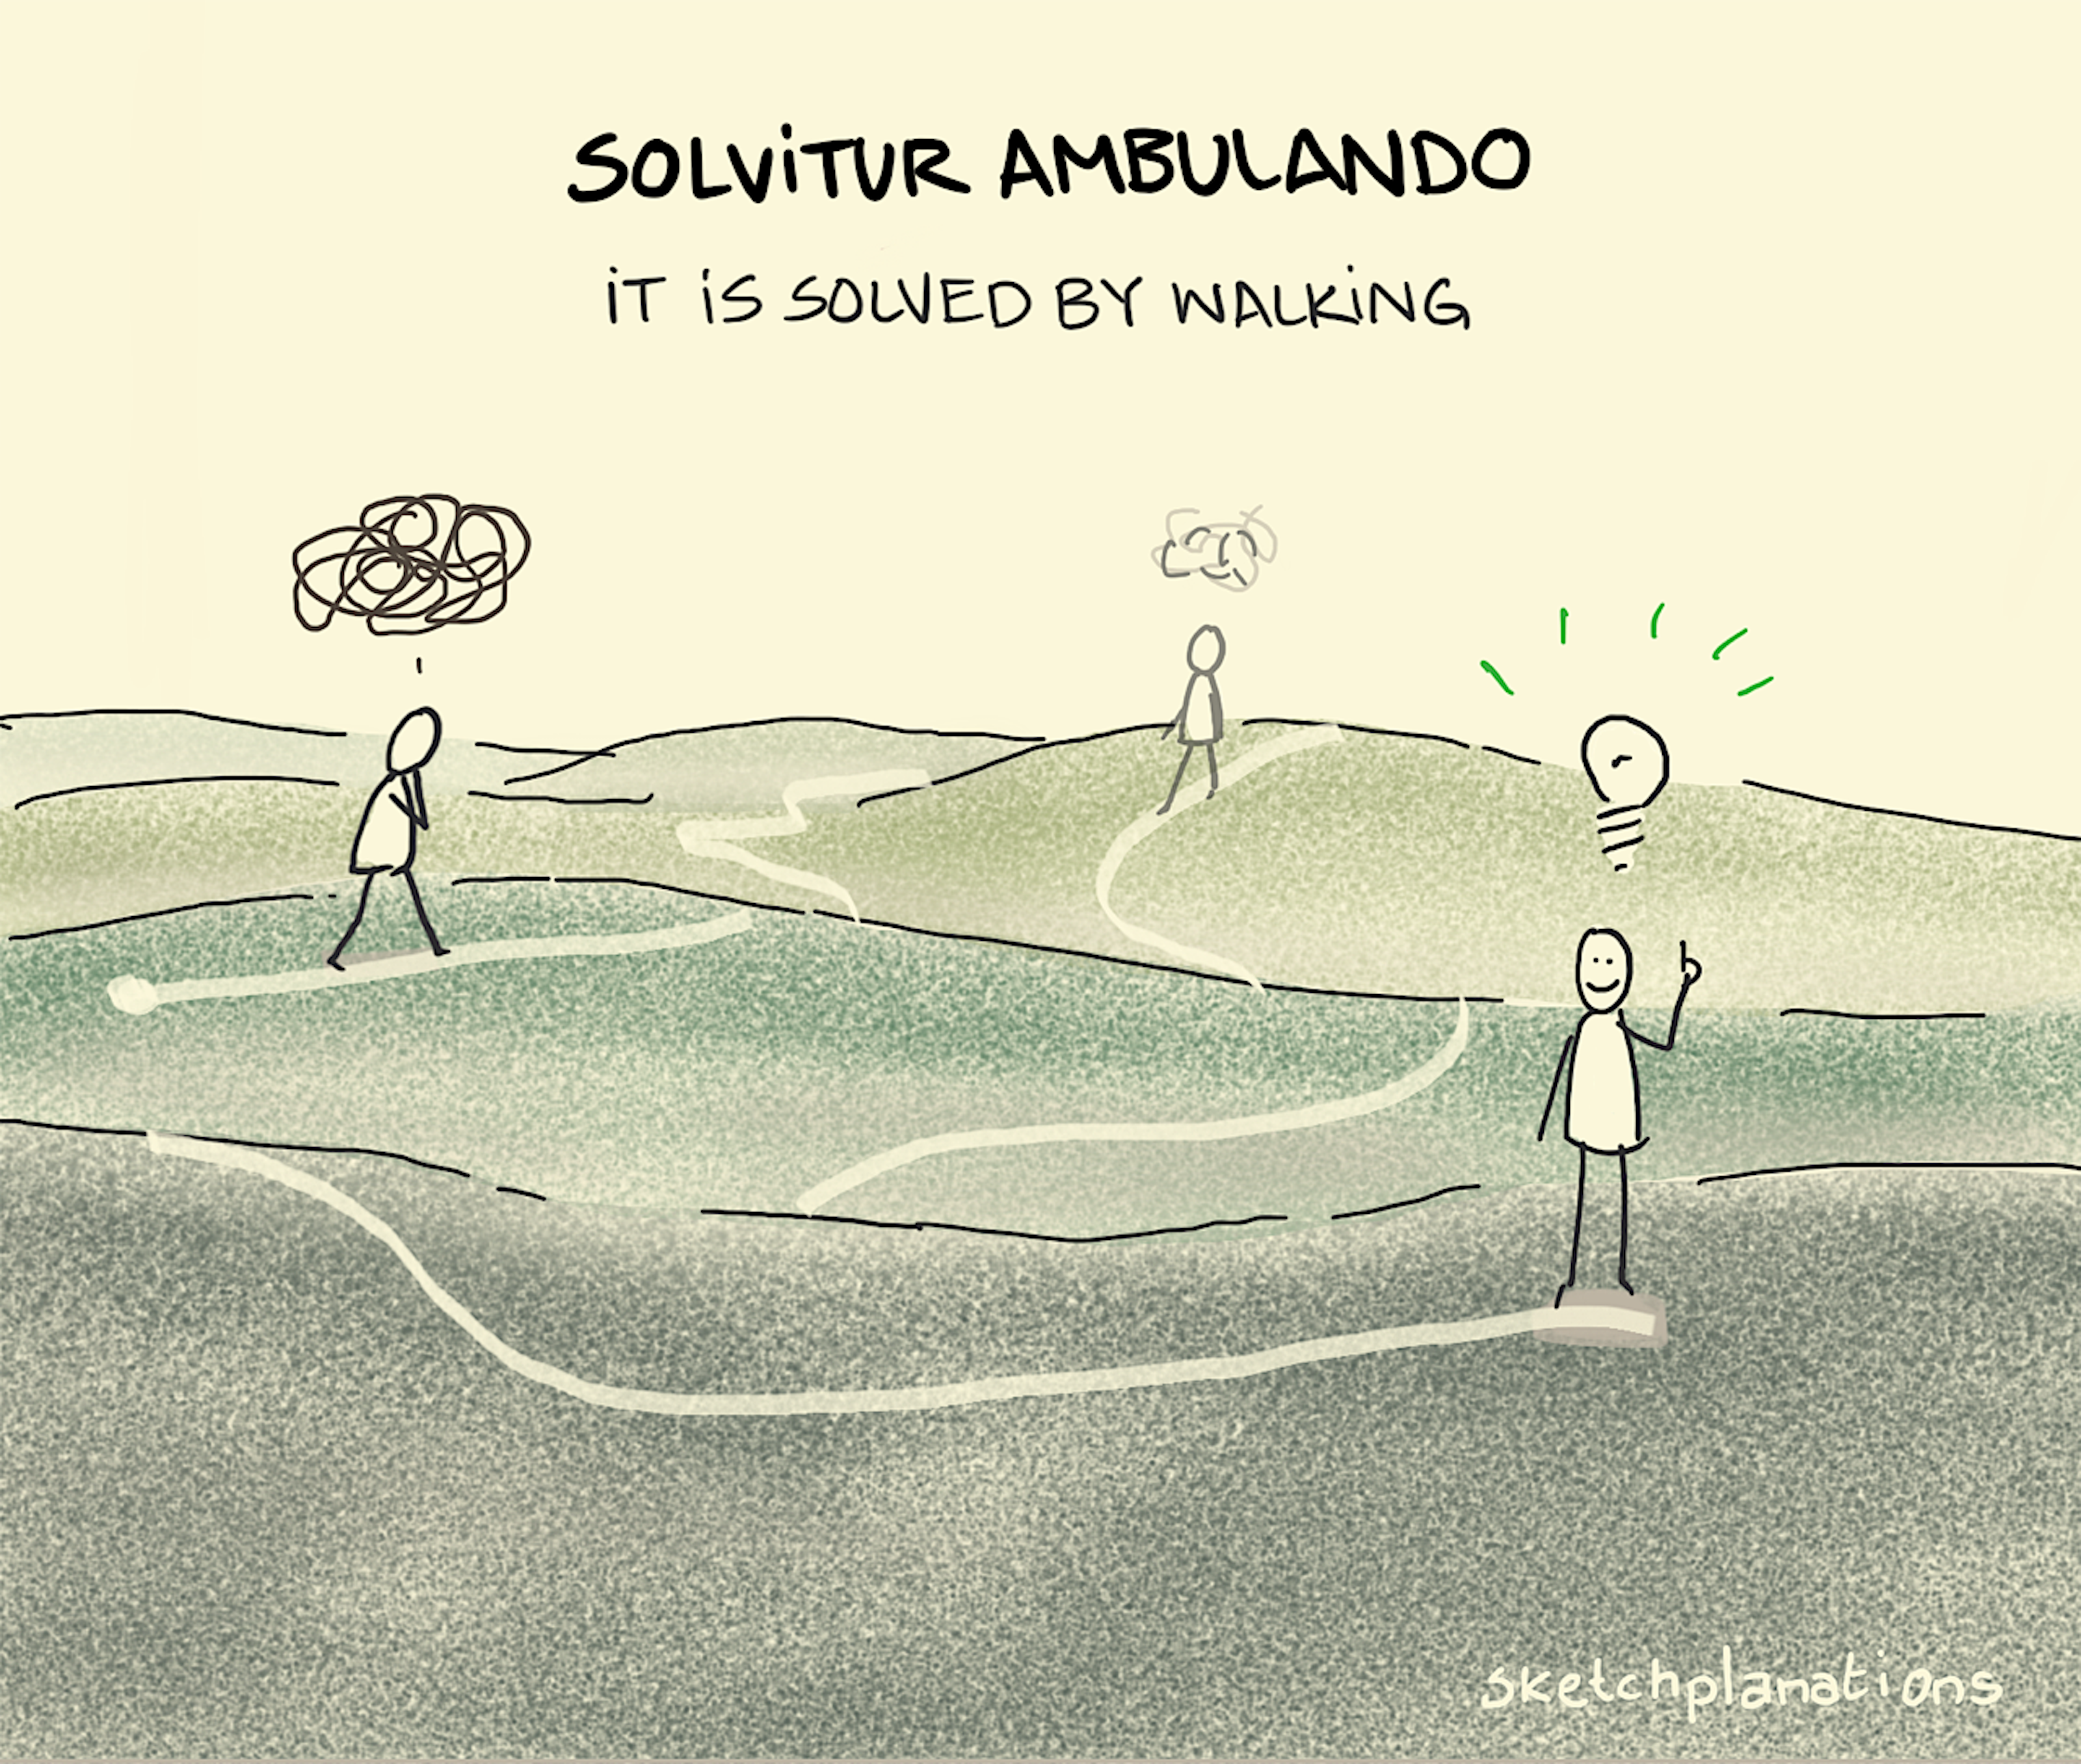 Solvitur ambulando, its solved by walking